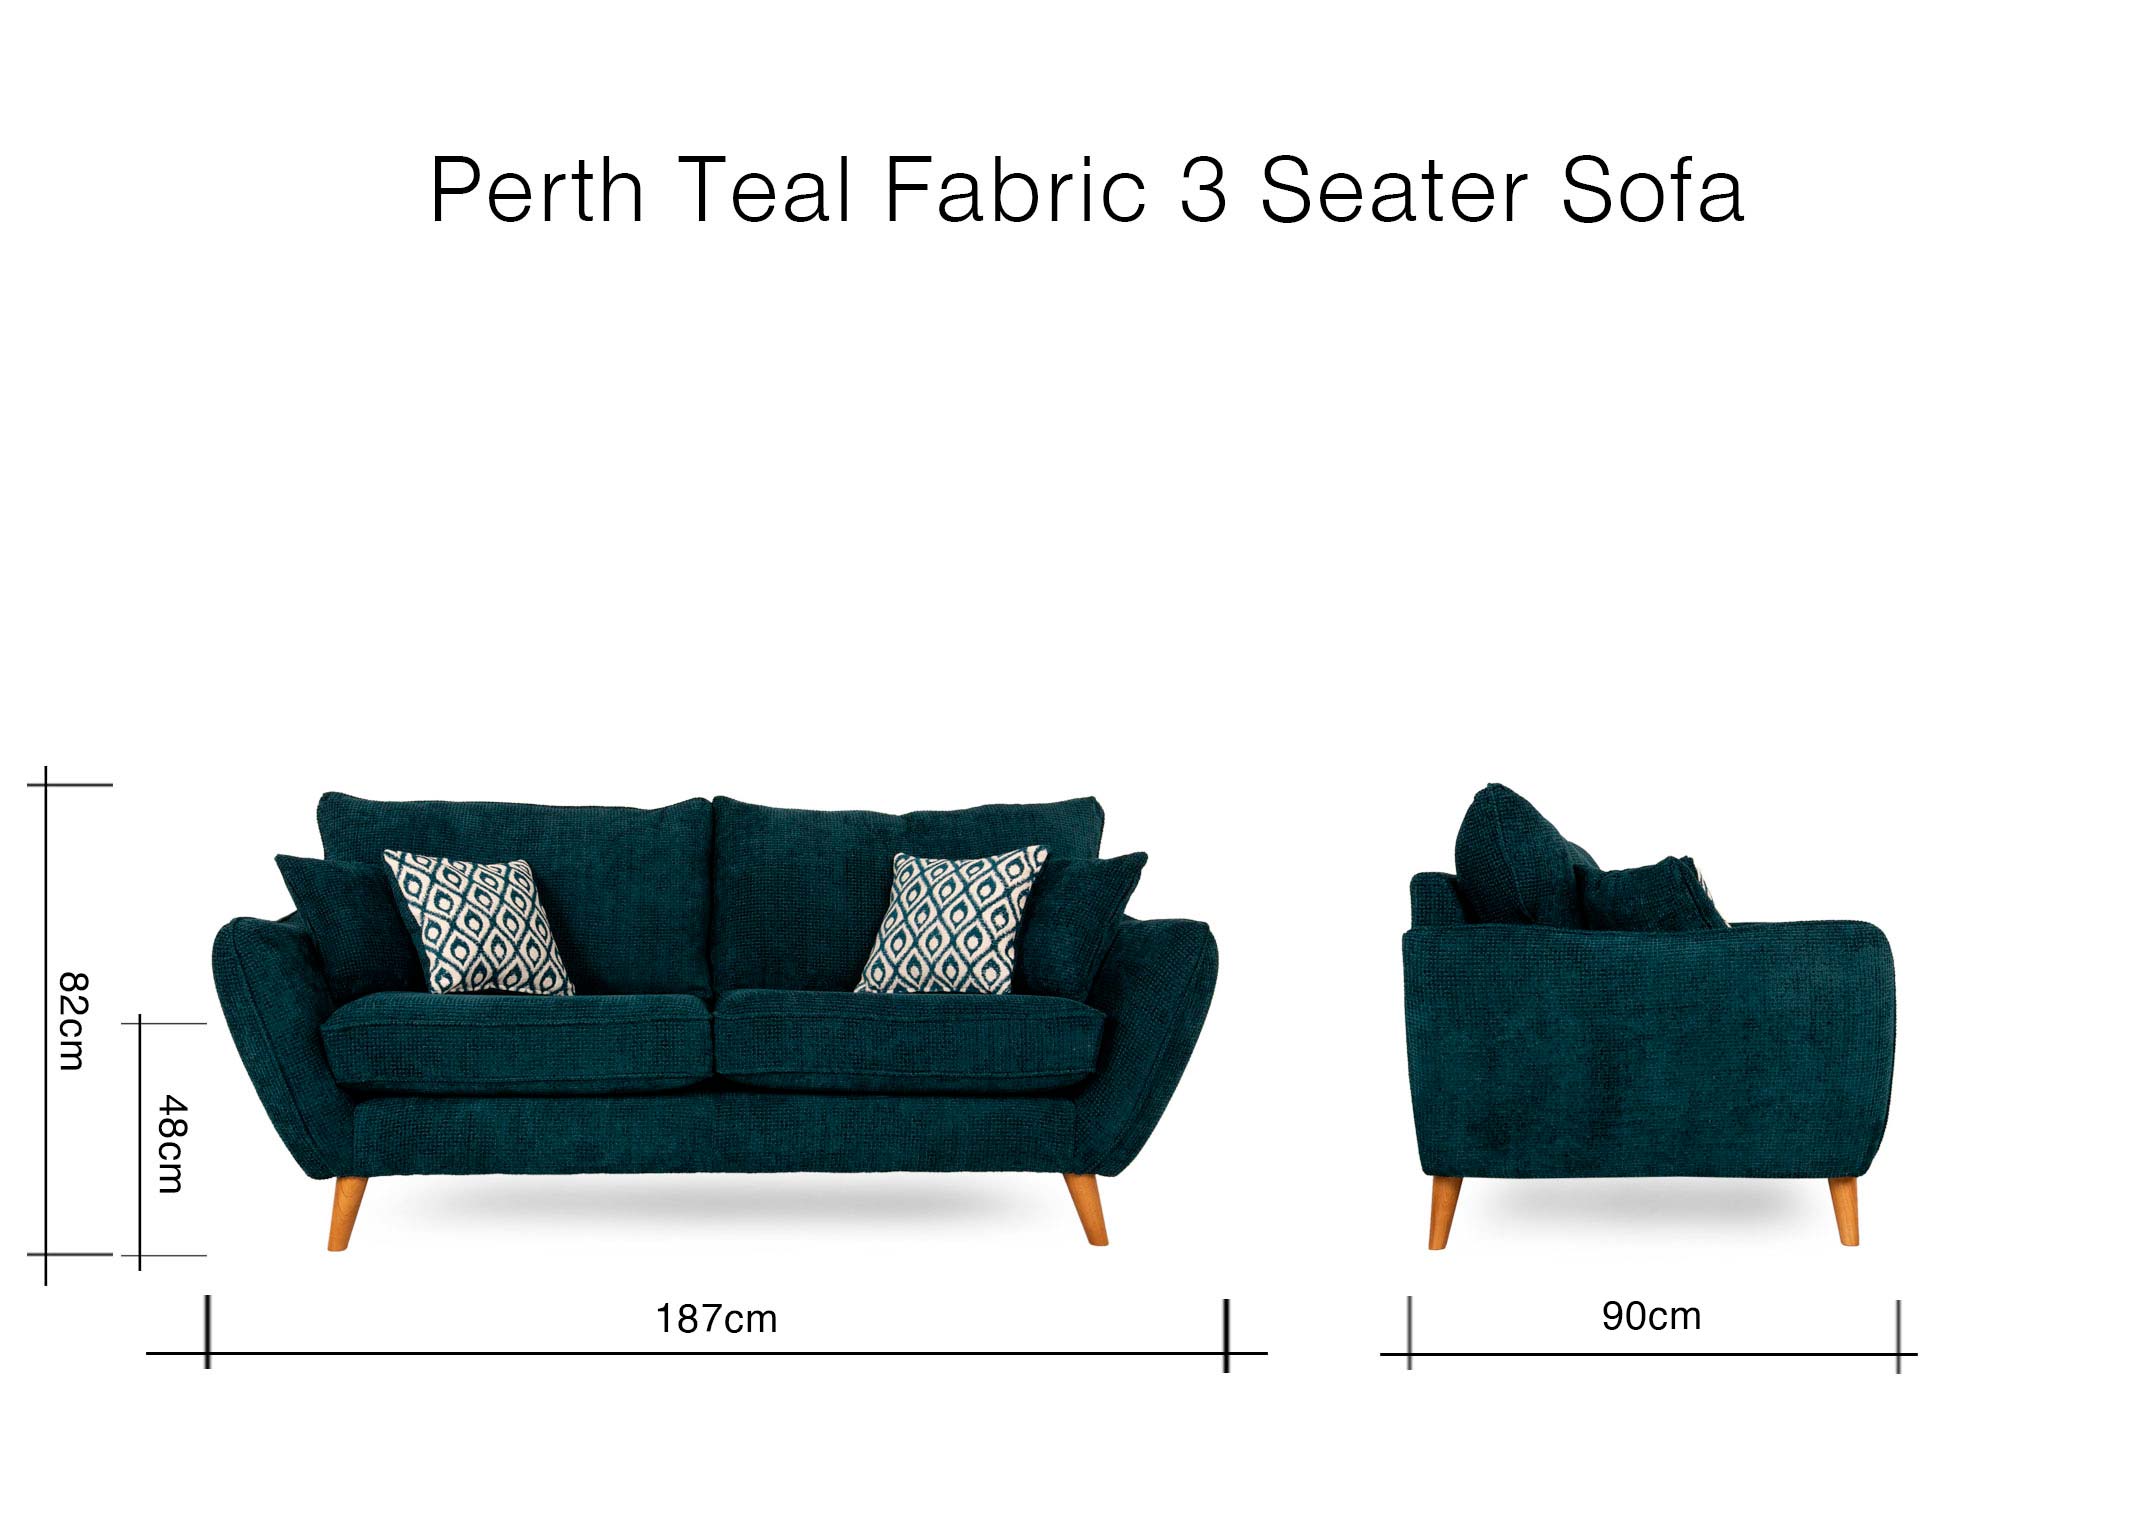 3 Seater Teal Fabric Sofa Perth Ez